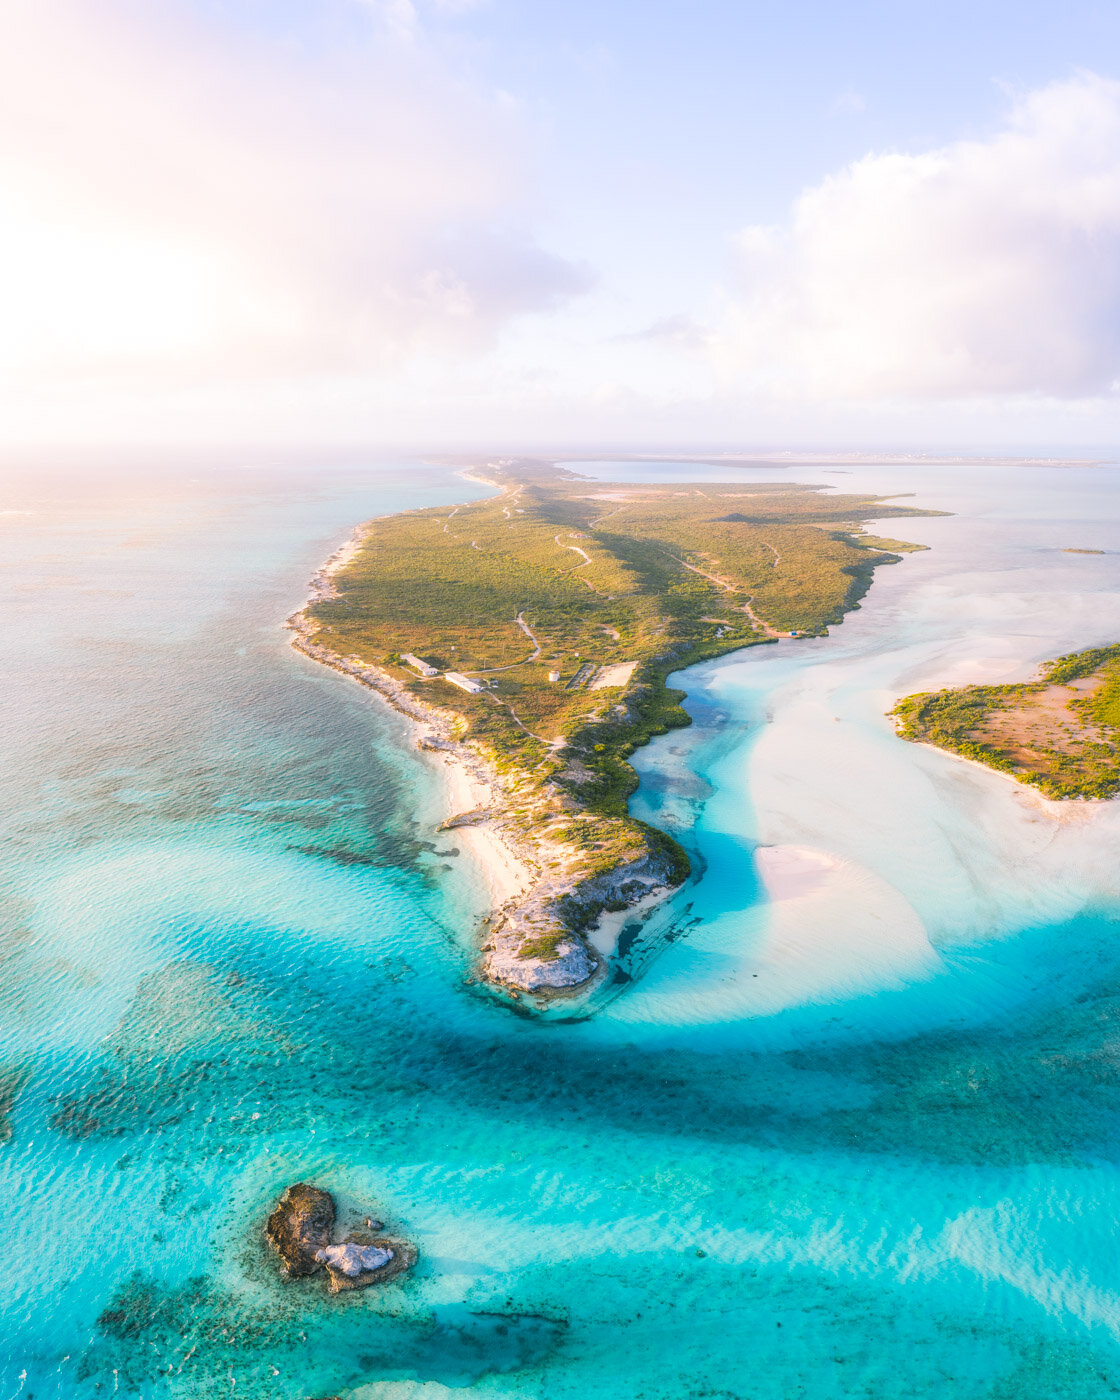 Photos of the Island of South Caicos by Michael Matti-1.jpg